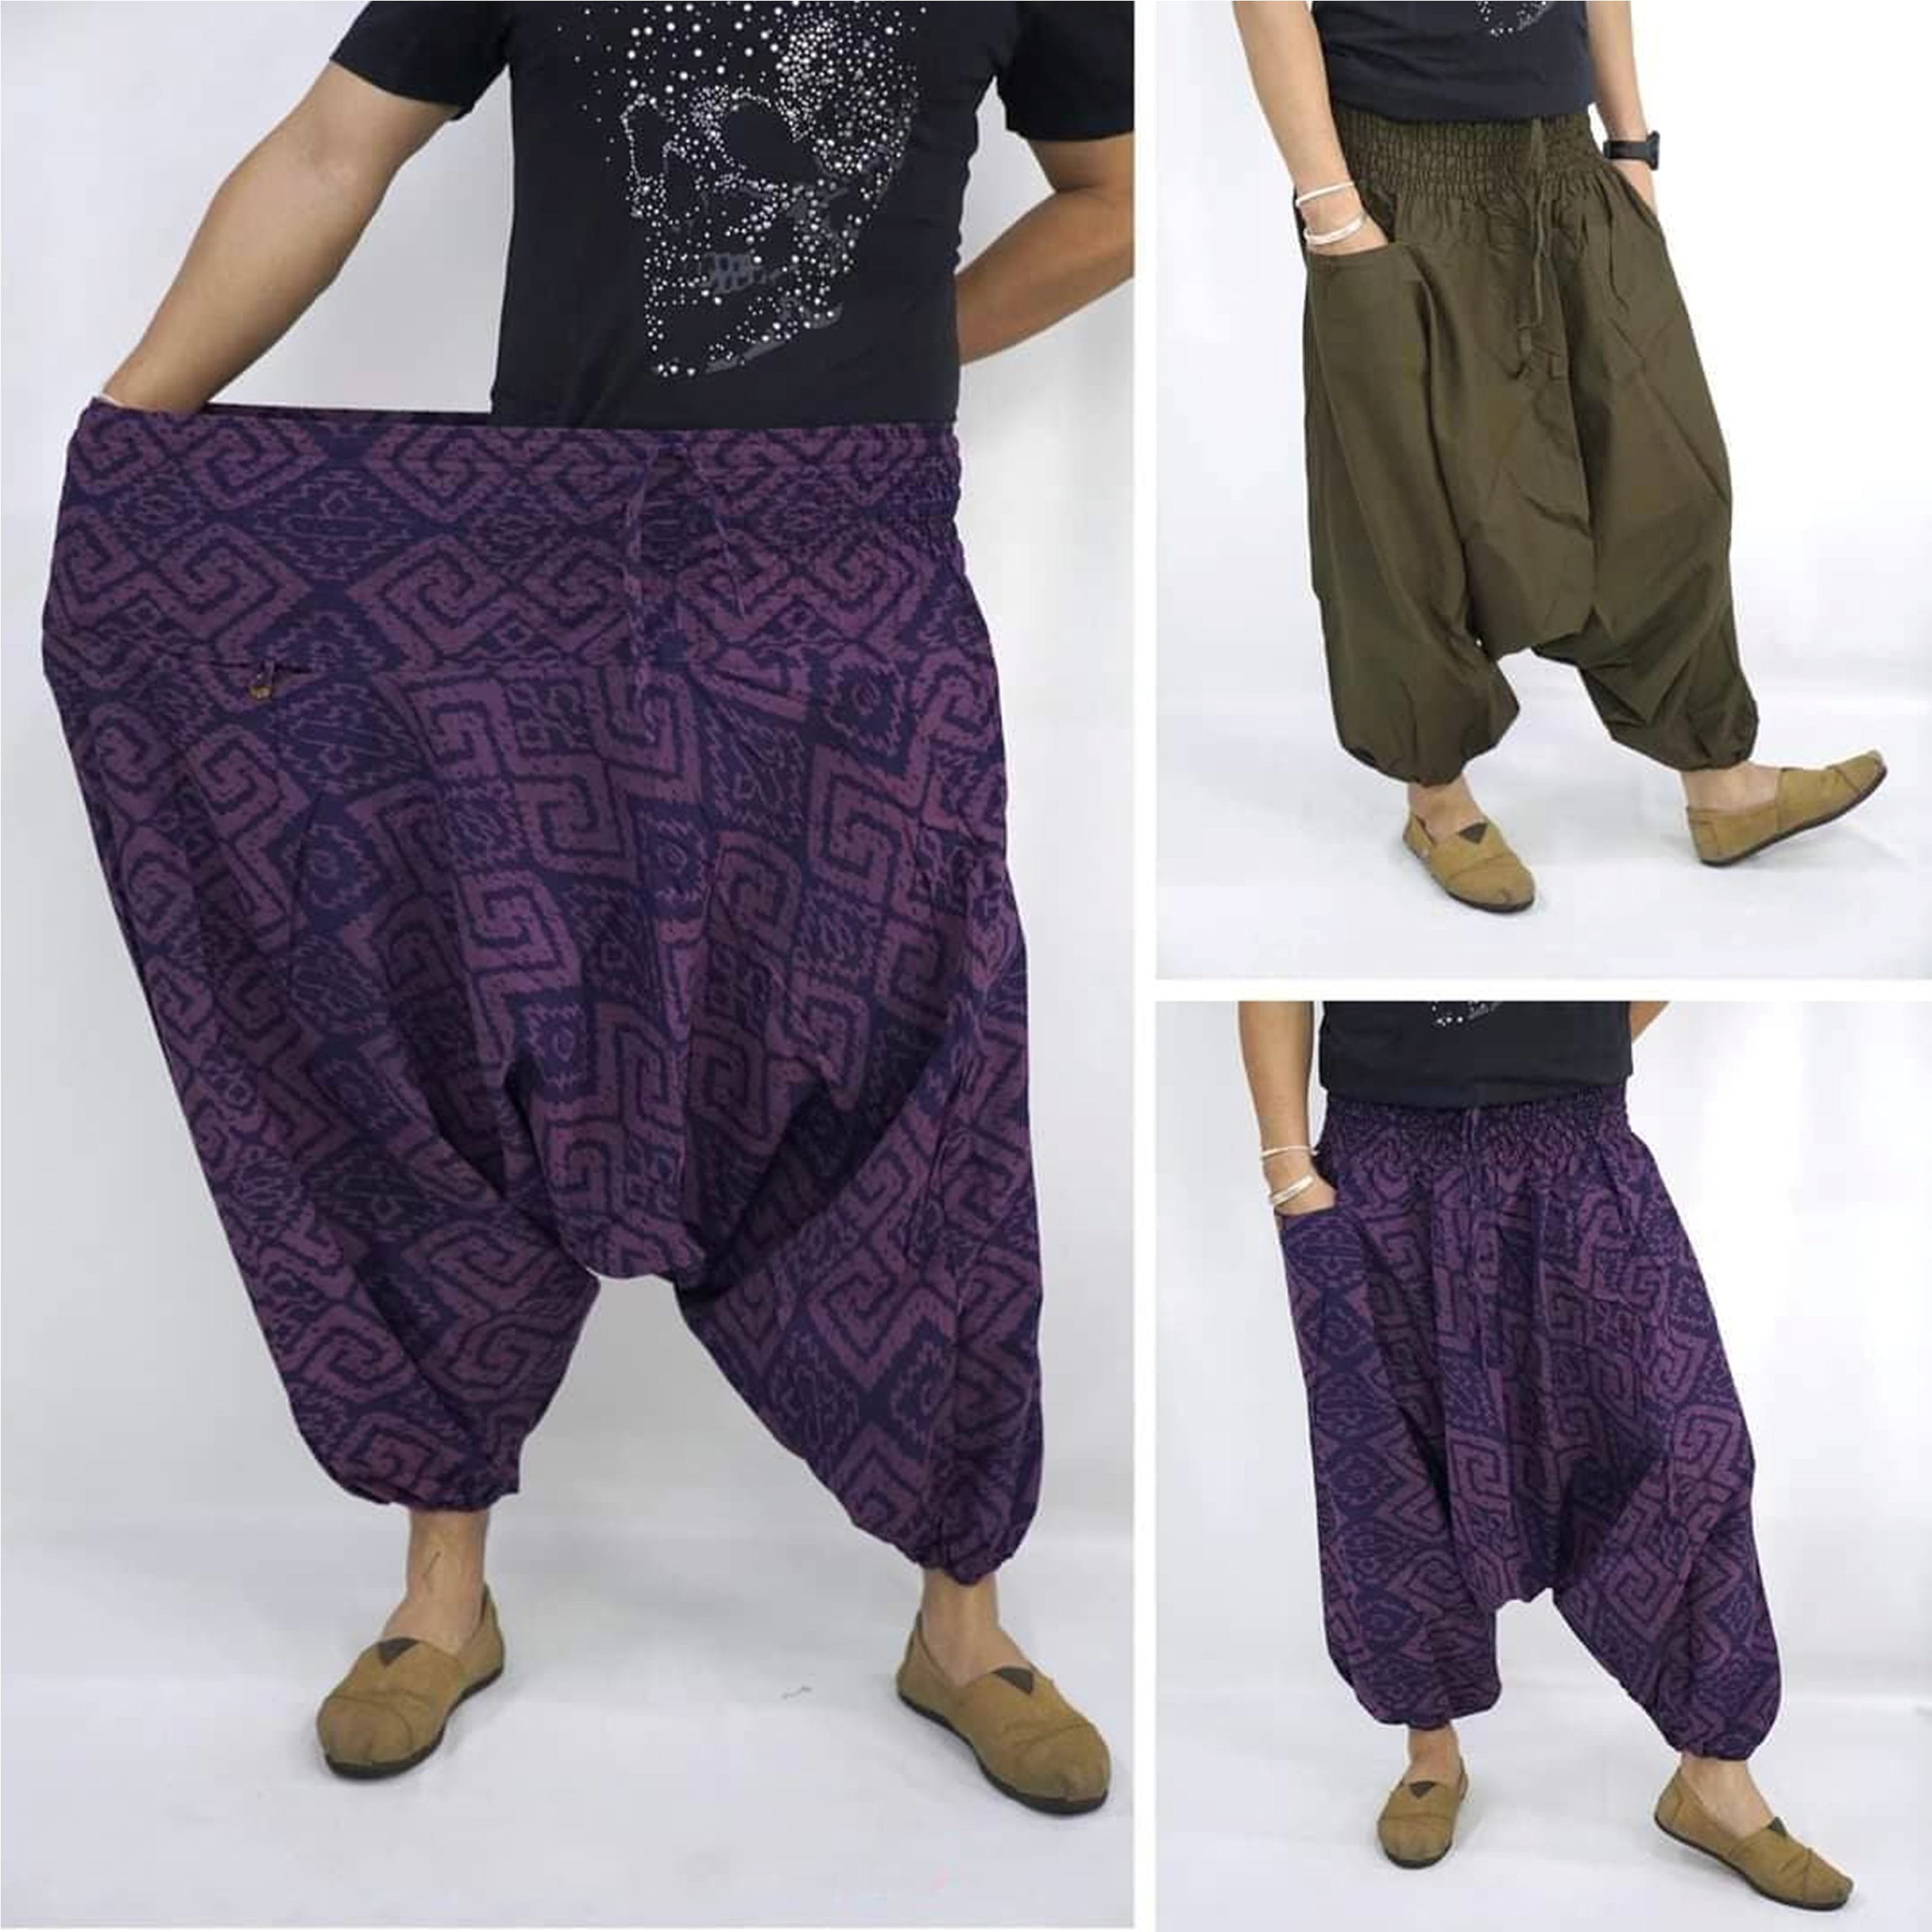 Thai fisherman pants Men's Japanese style pants Cotton Pants Yoga Pants Comfortable Breathable One Size Loose Fit Festival Boho Hippie